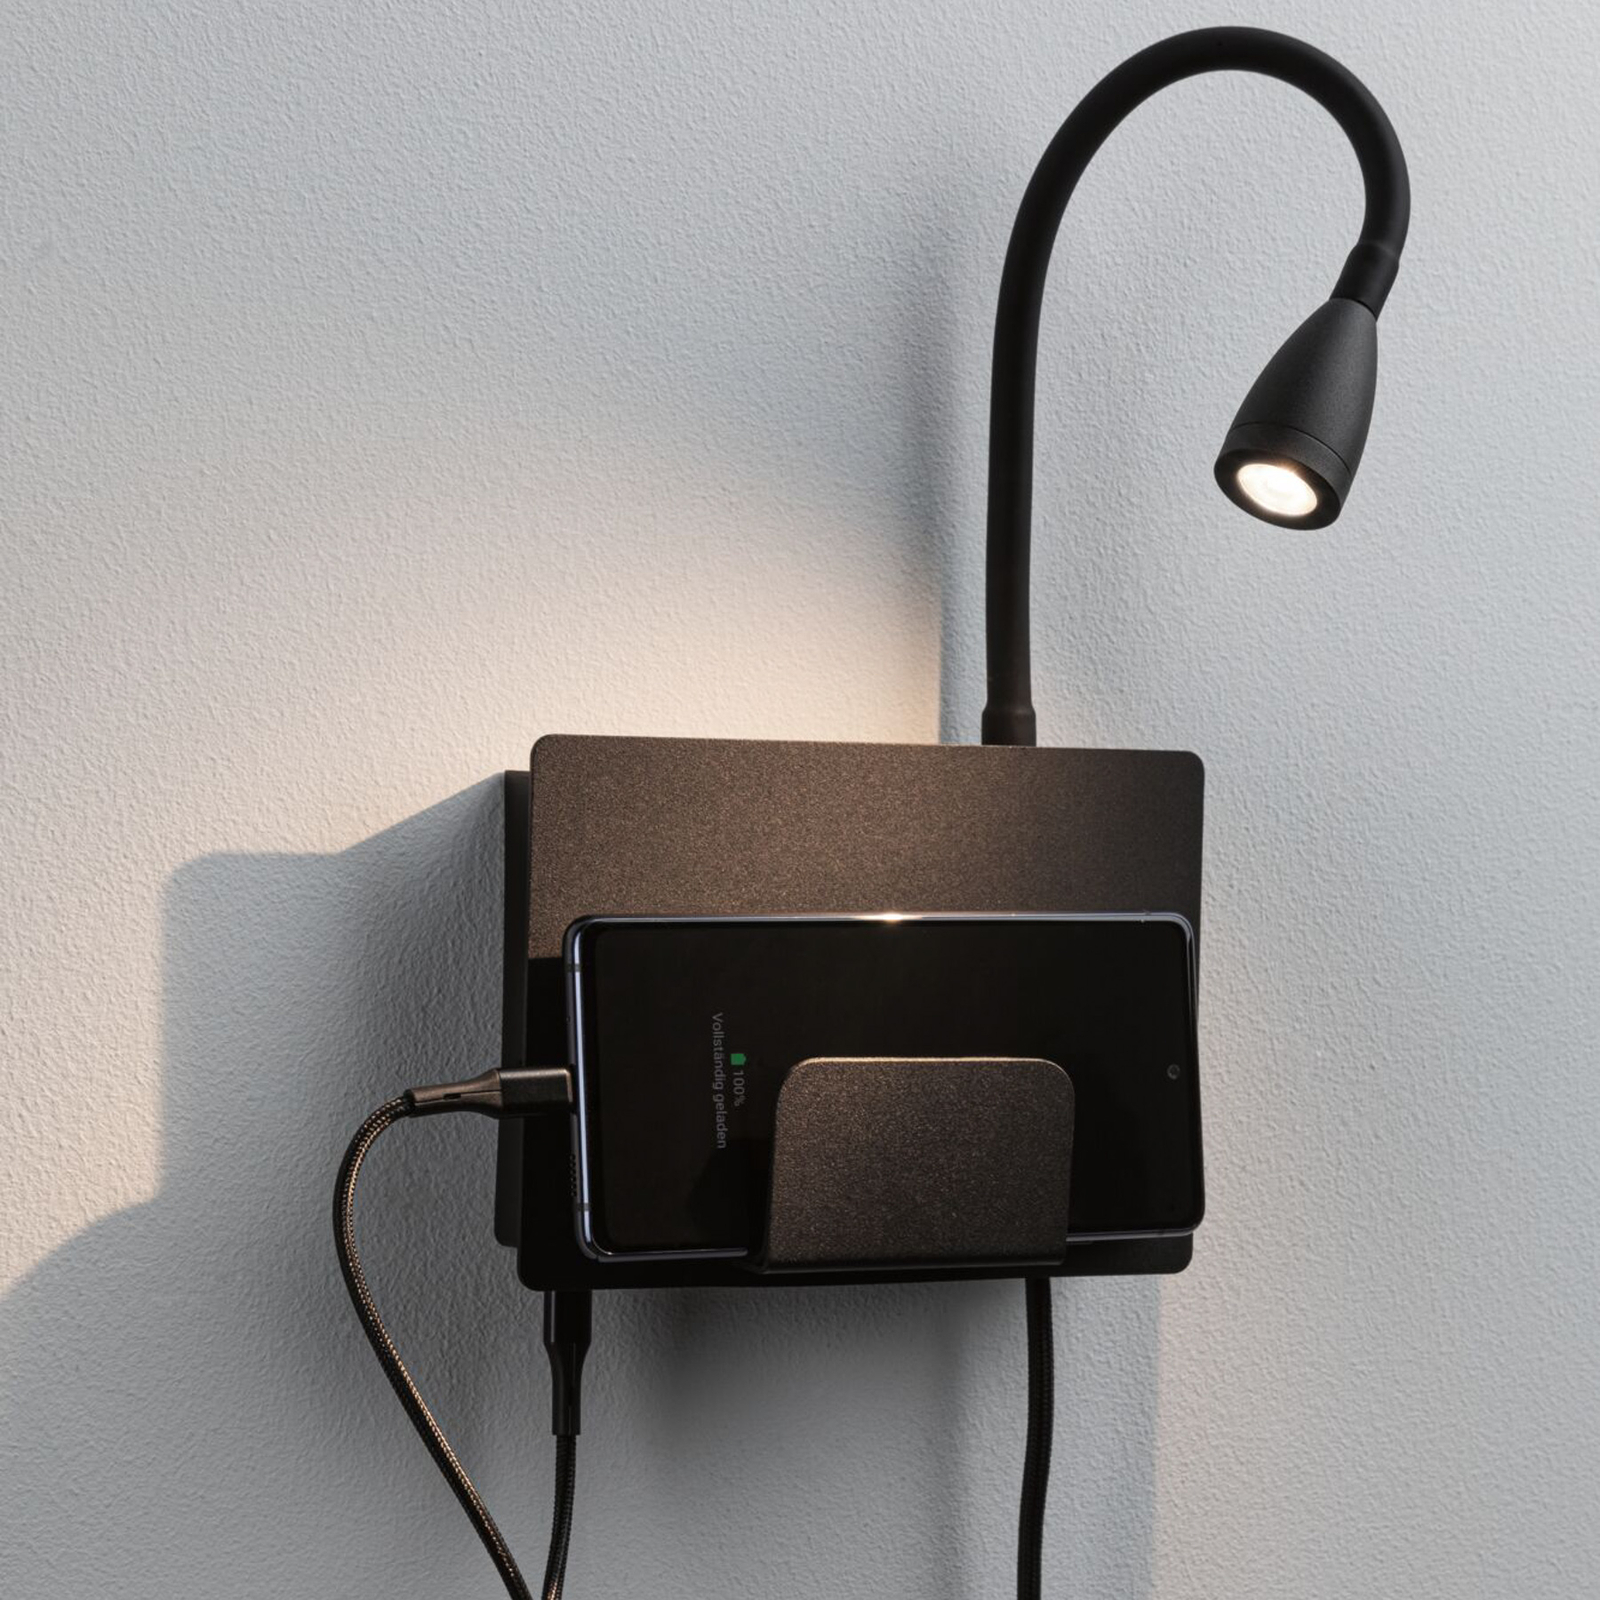 Paulmann Halina USB LED wandlamp, flexibele arm